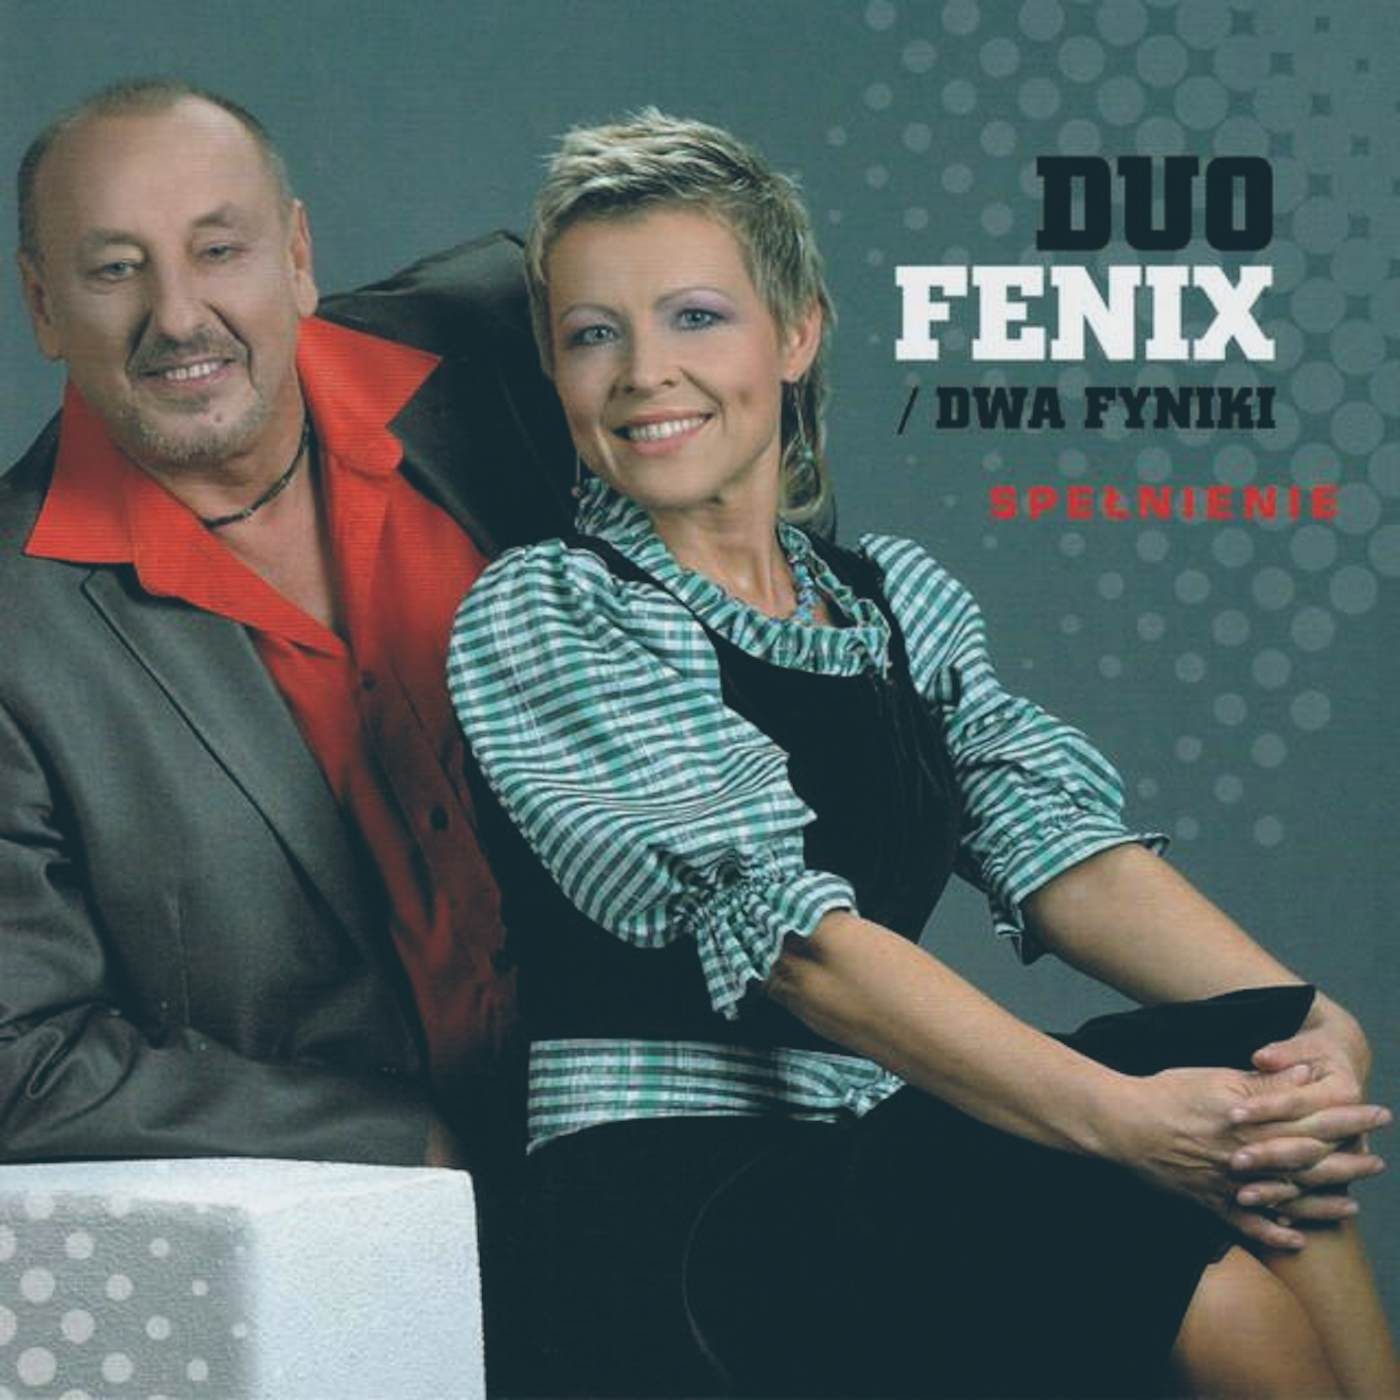 Duo Fenix